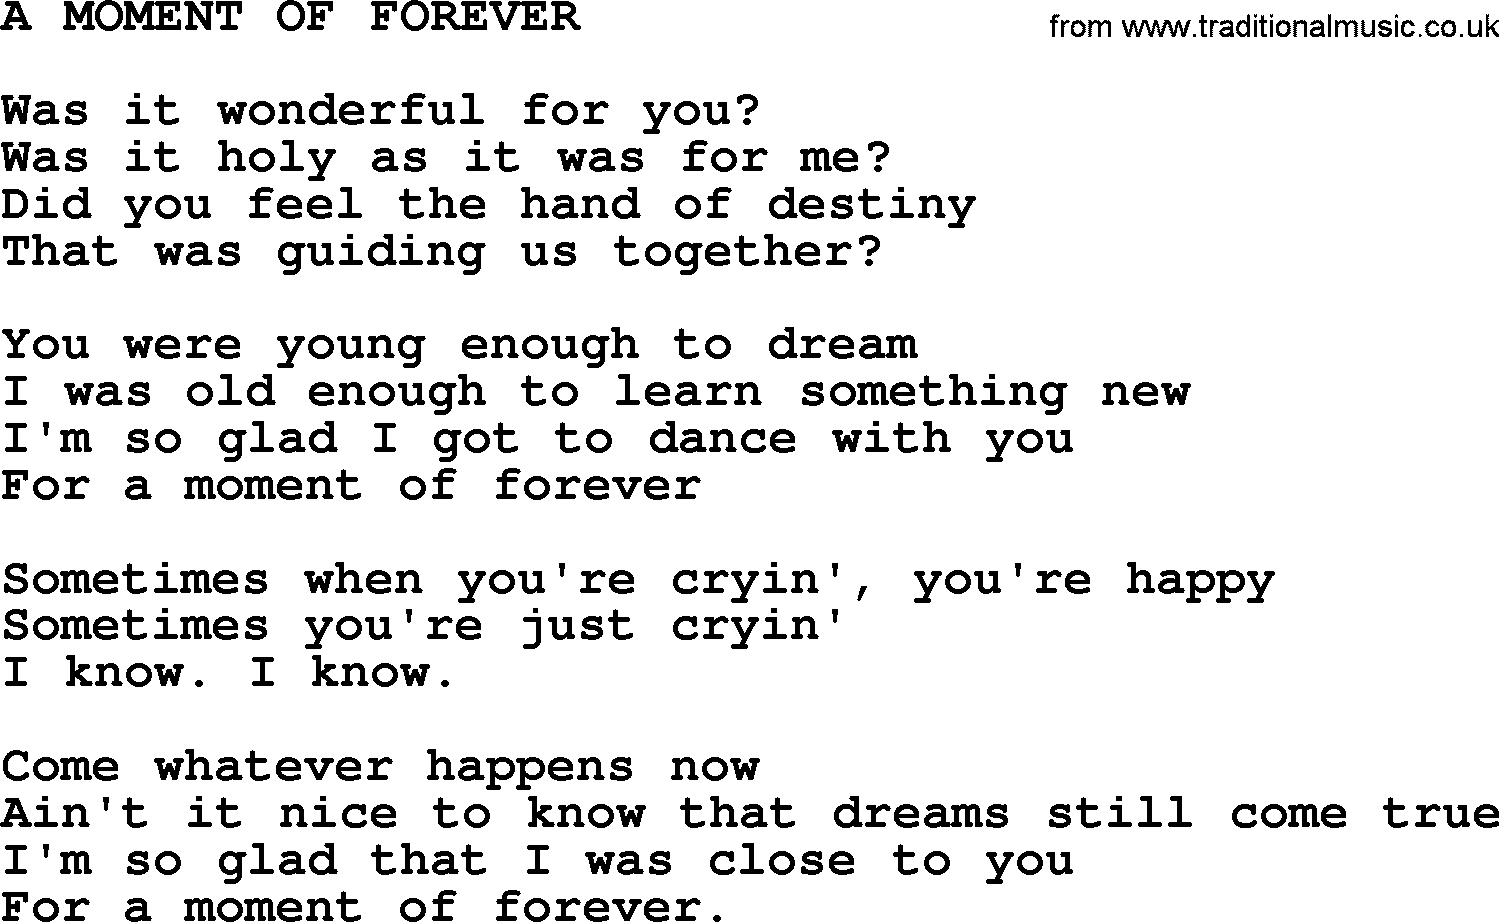 Kris Kristofferson song: A Moment Of Forever lyrics